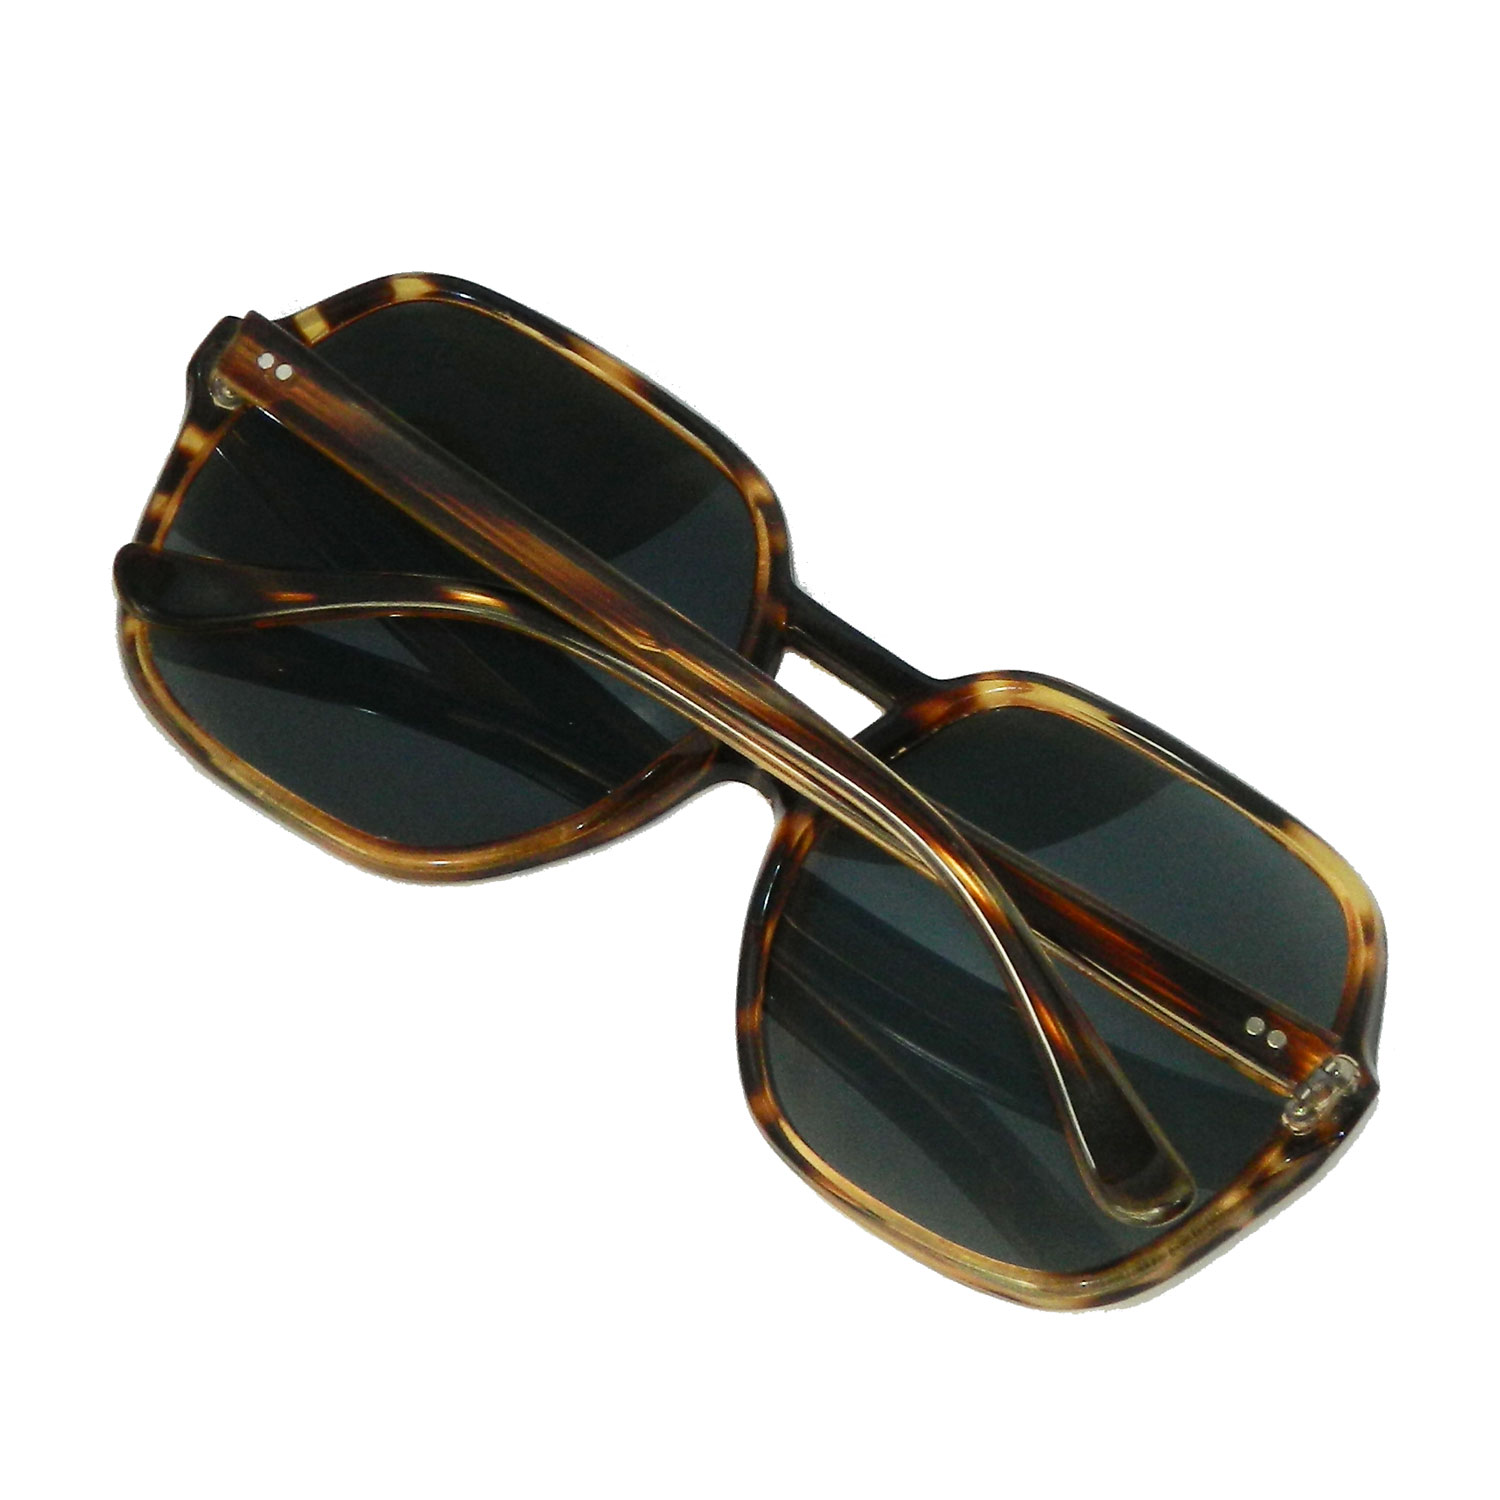 1970s oversize Italian sunglasses